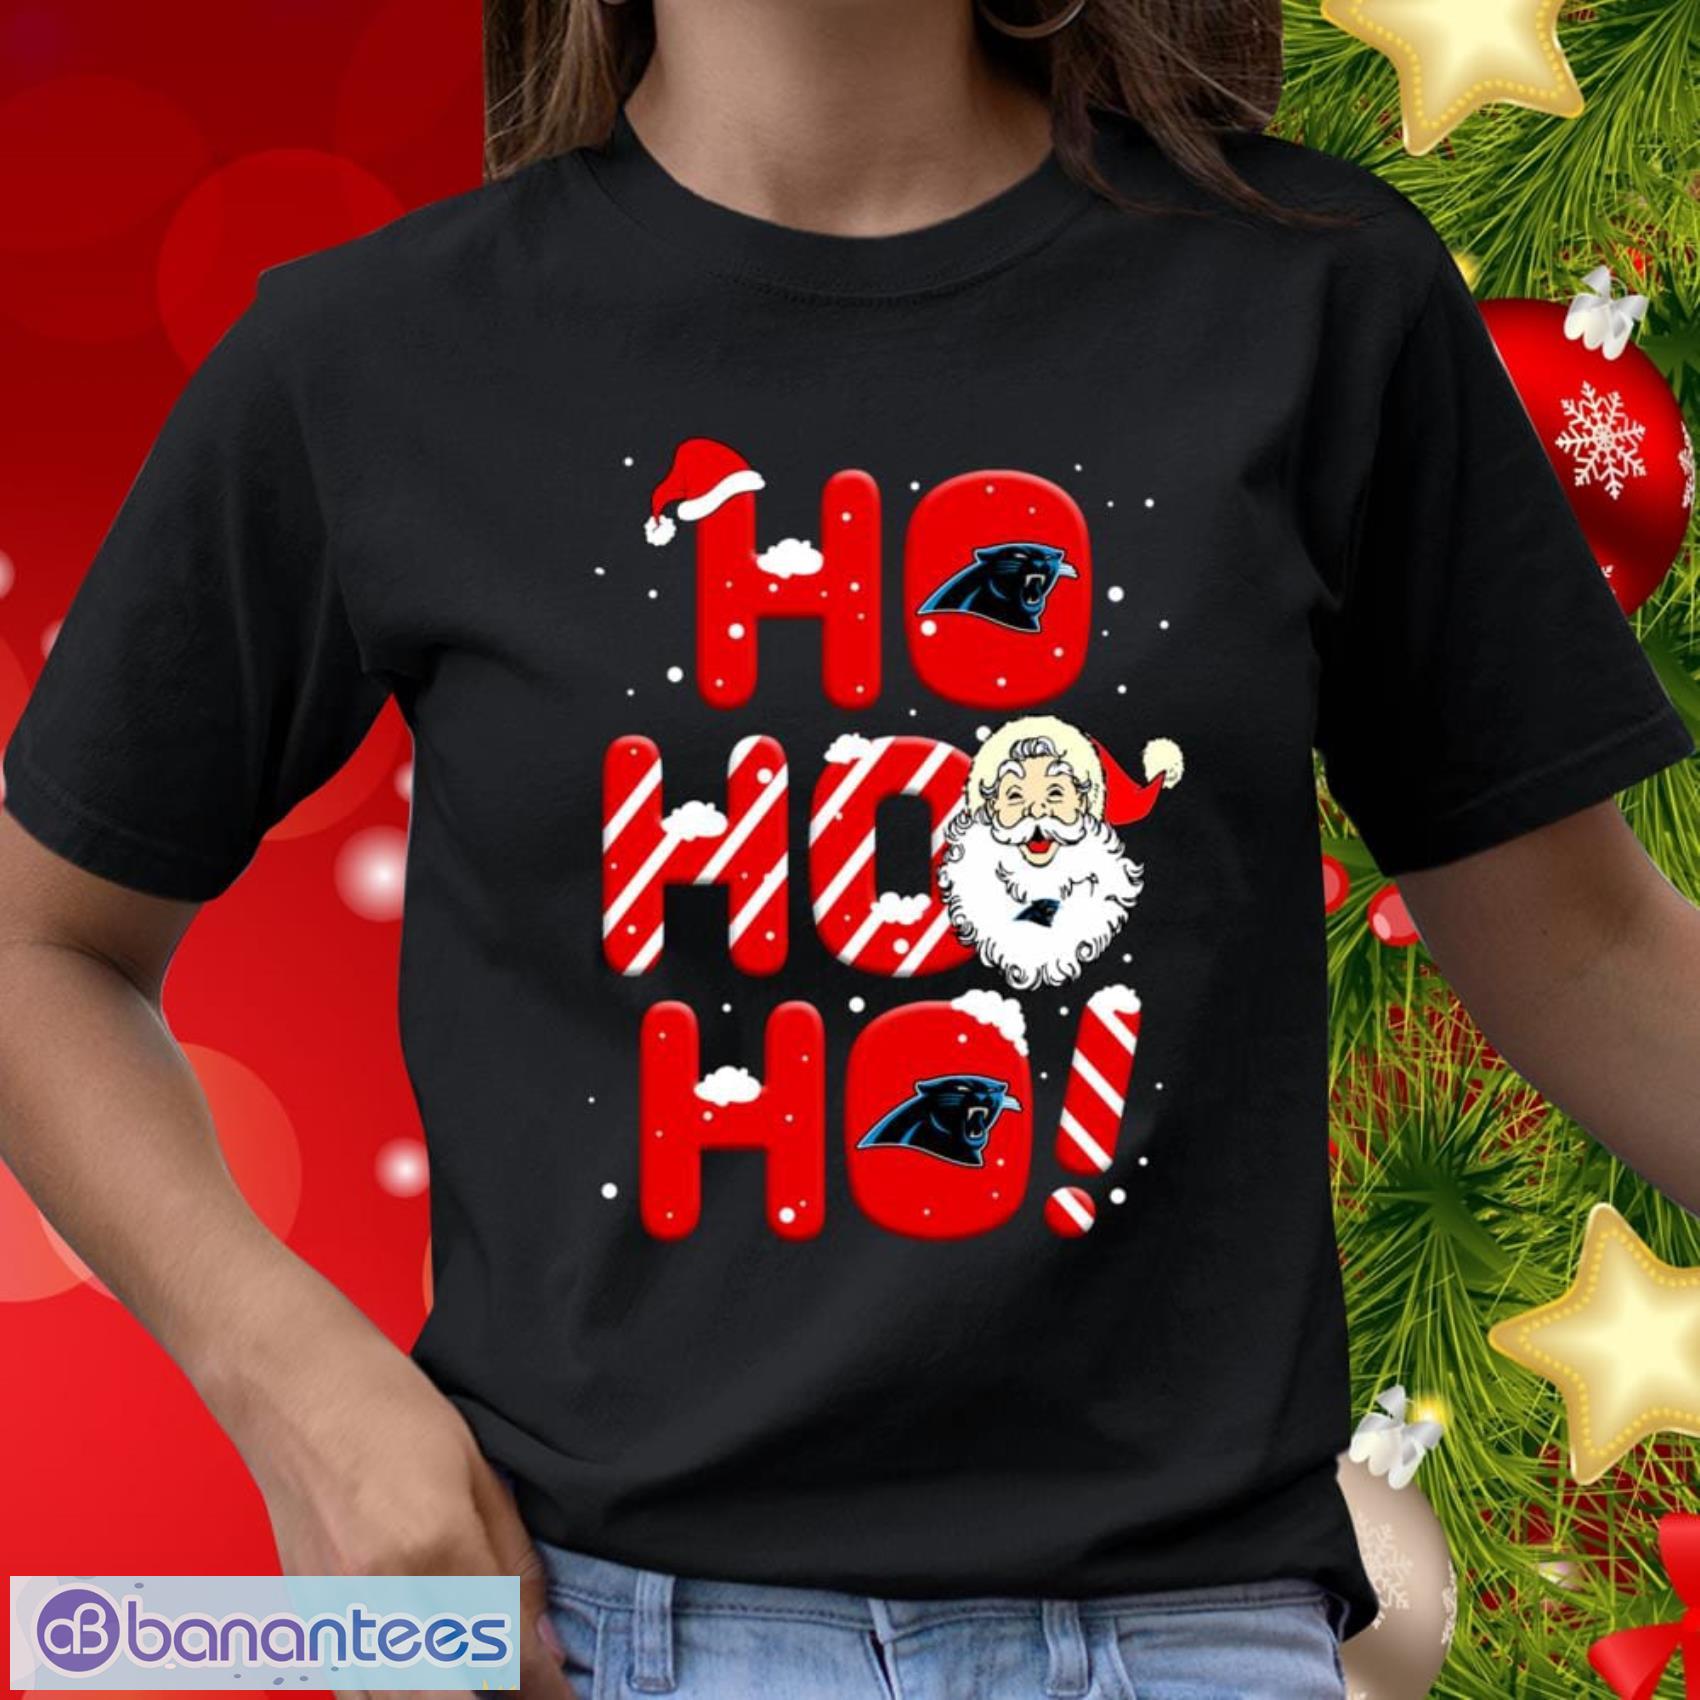 Carolina Panthers NFL Football Gift Fr Fans Ho Ho Ho Santa Claus Merry Christmas Shirt T Shirt - Carolina Panthers NFL Football Ho Ho Ho Santa Claus Merry Christmas Shirt T Shirt_2